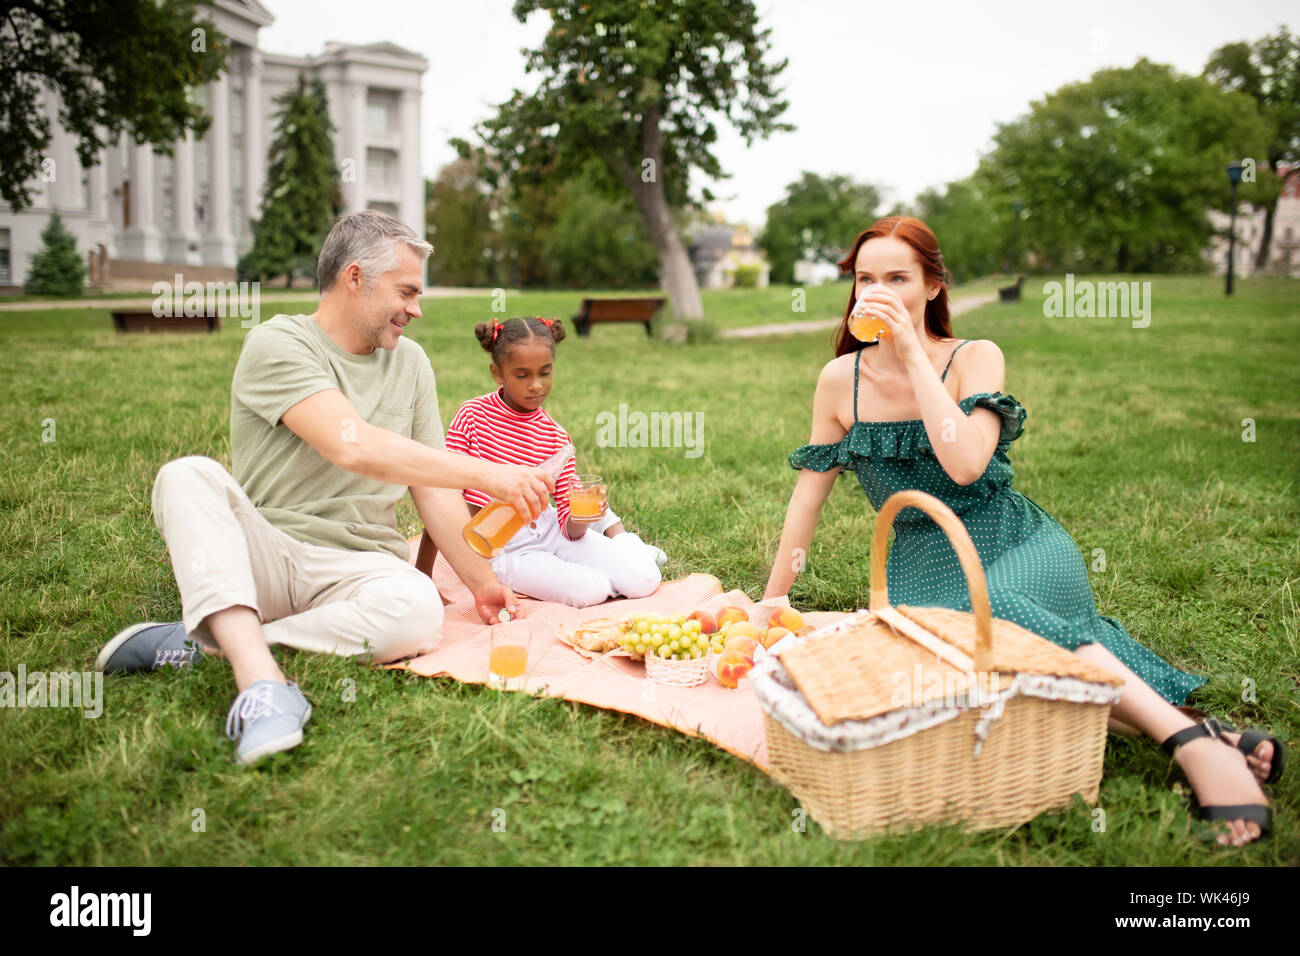 Daughter feeling joyful while having picnic with adoptive parents Stock Photo